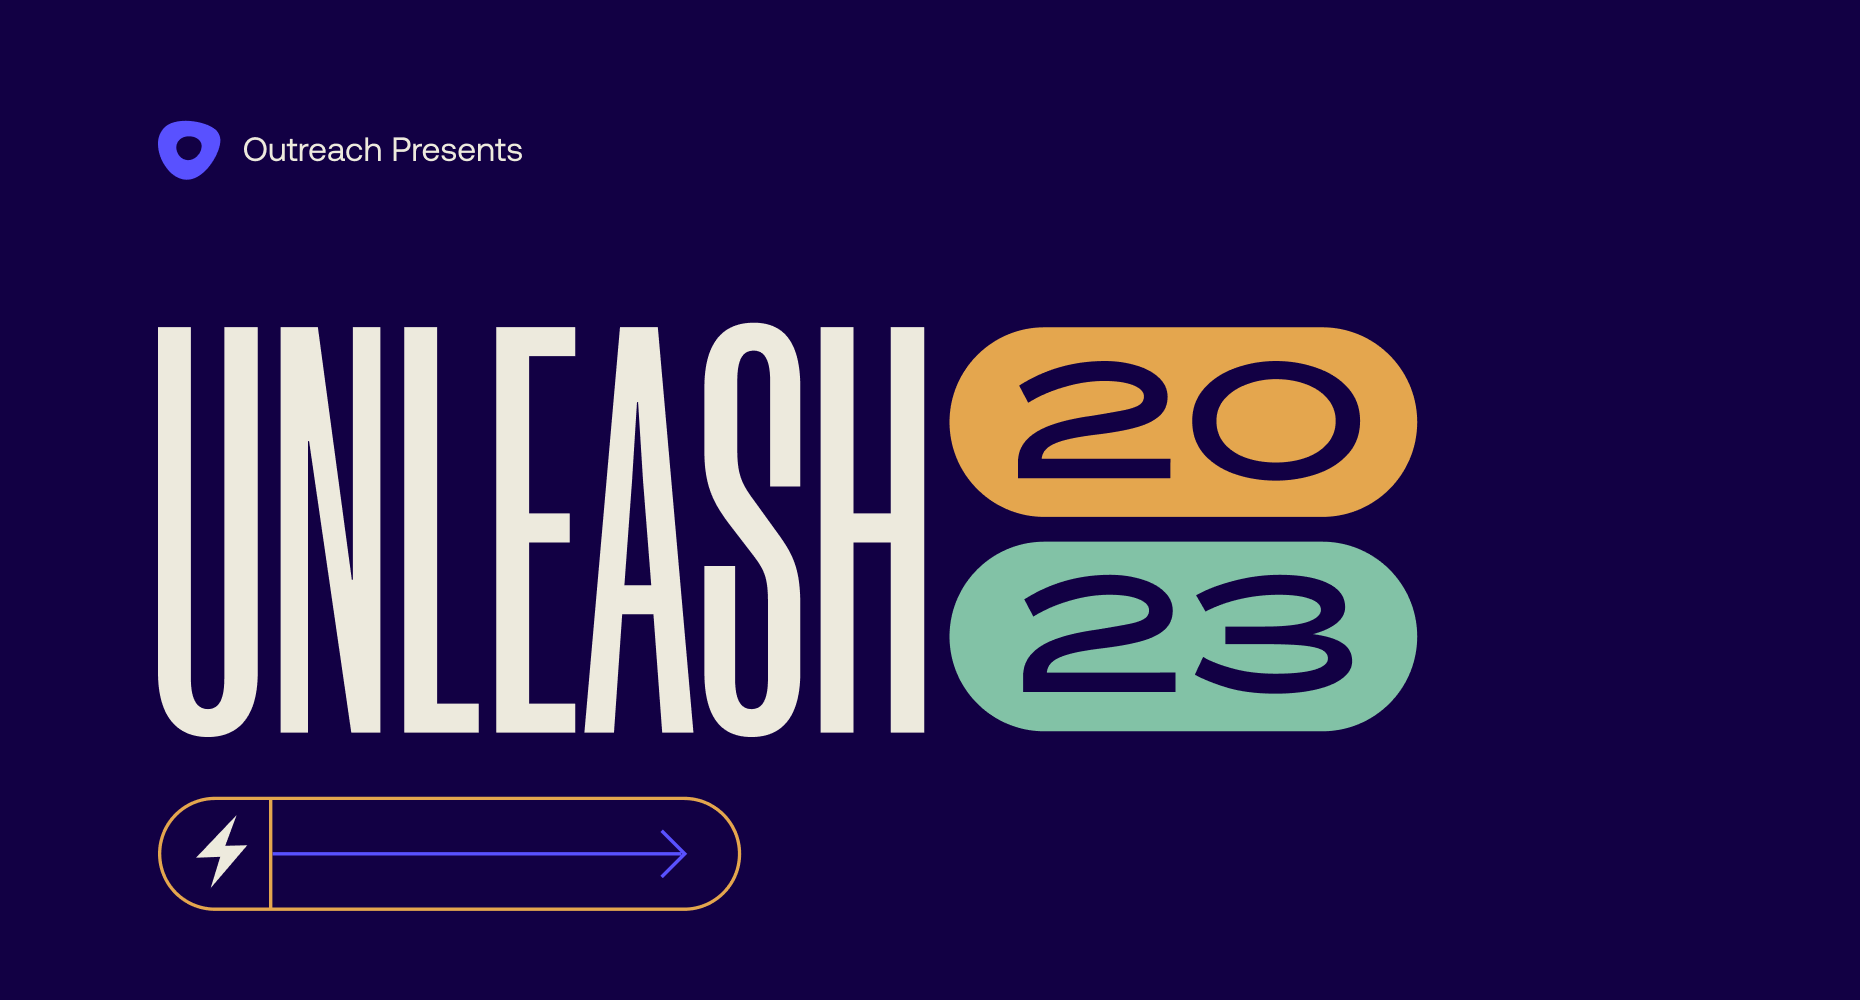 Unleash 2023 logo